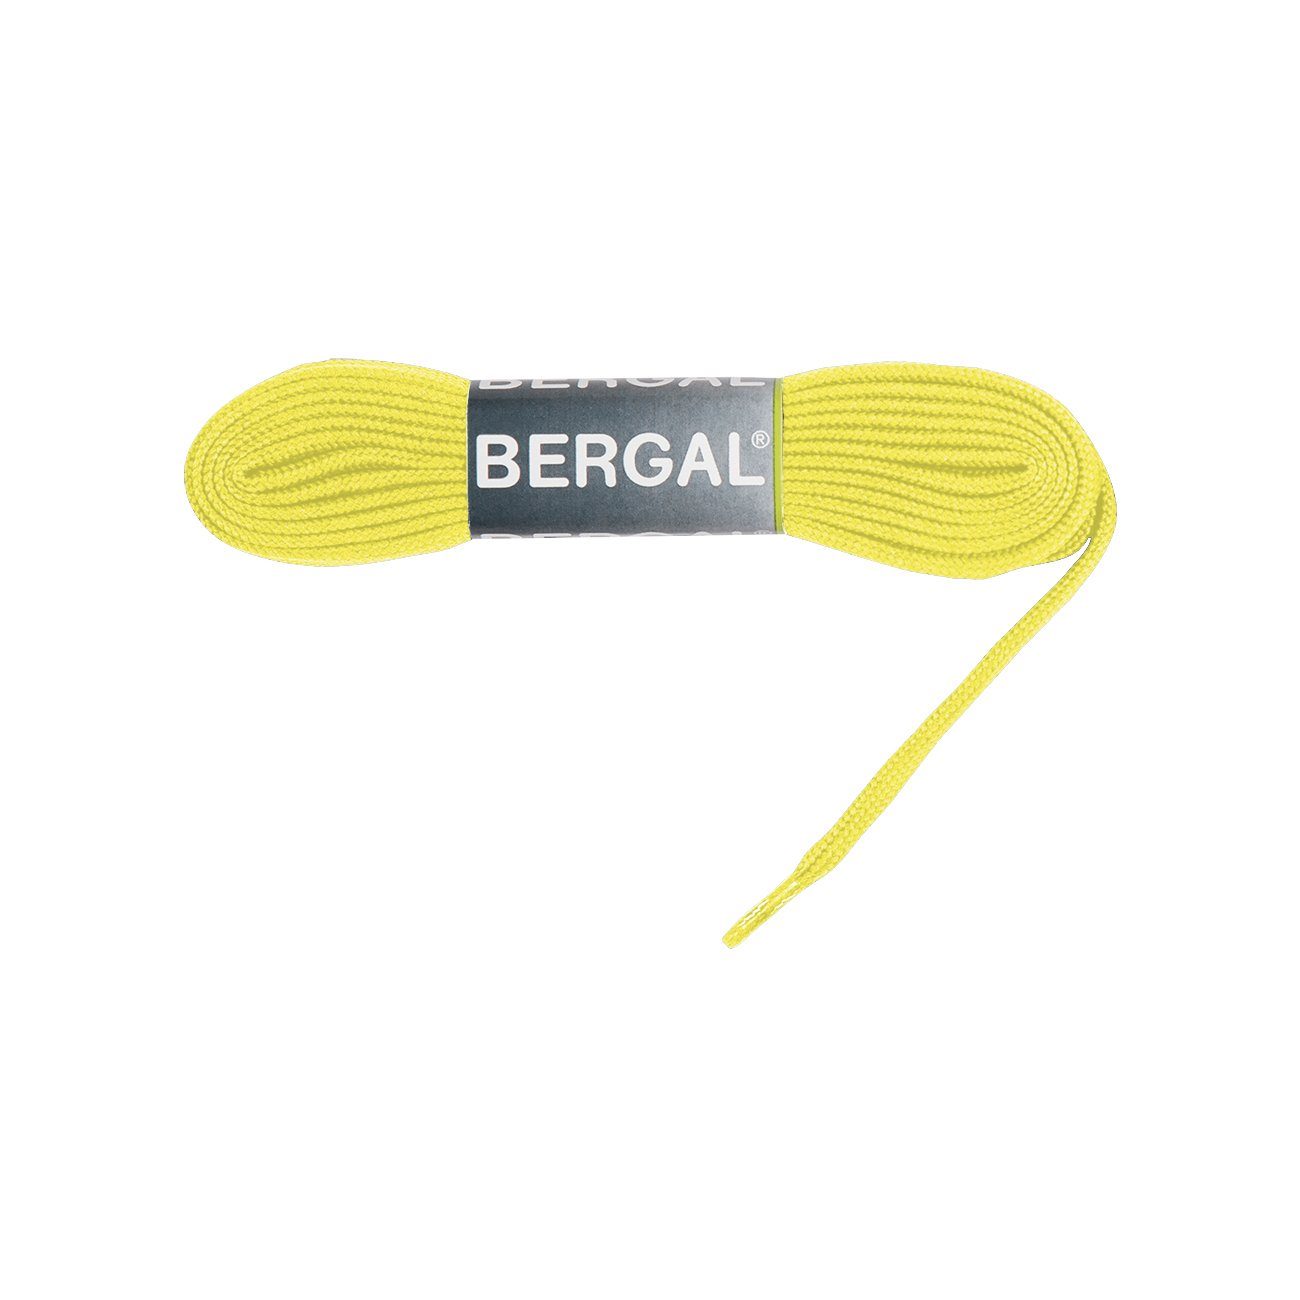 Bergal Schnürsenkel Sneaker Laces 10 mm Breit Flach - Neongelb 